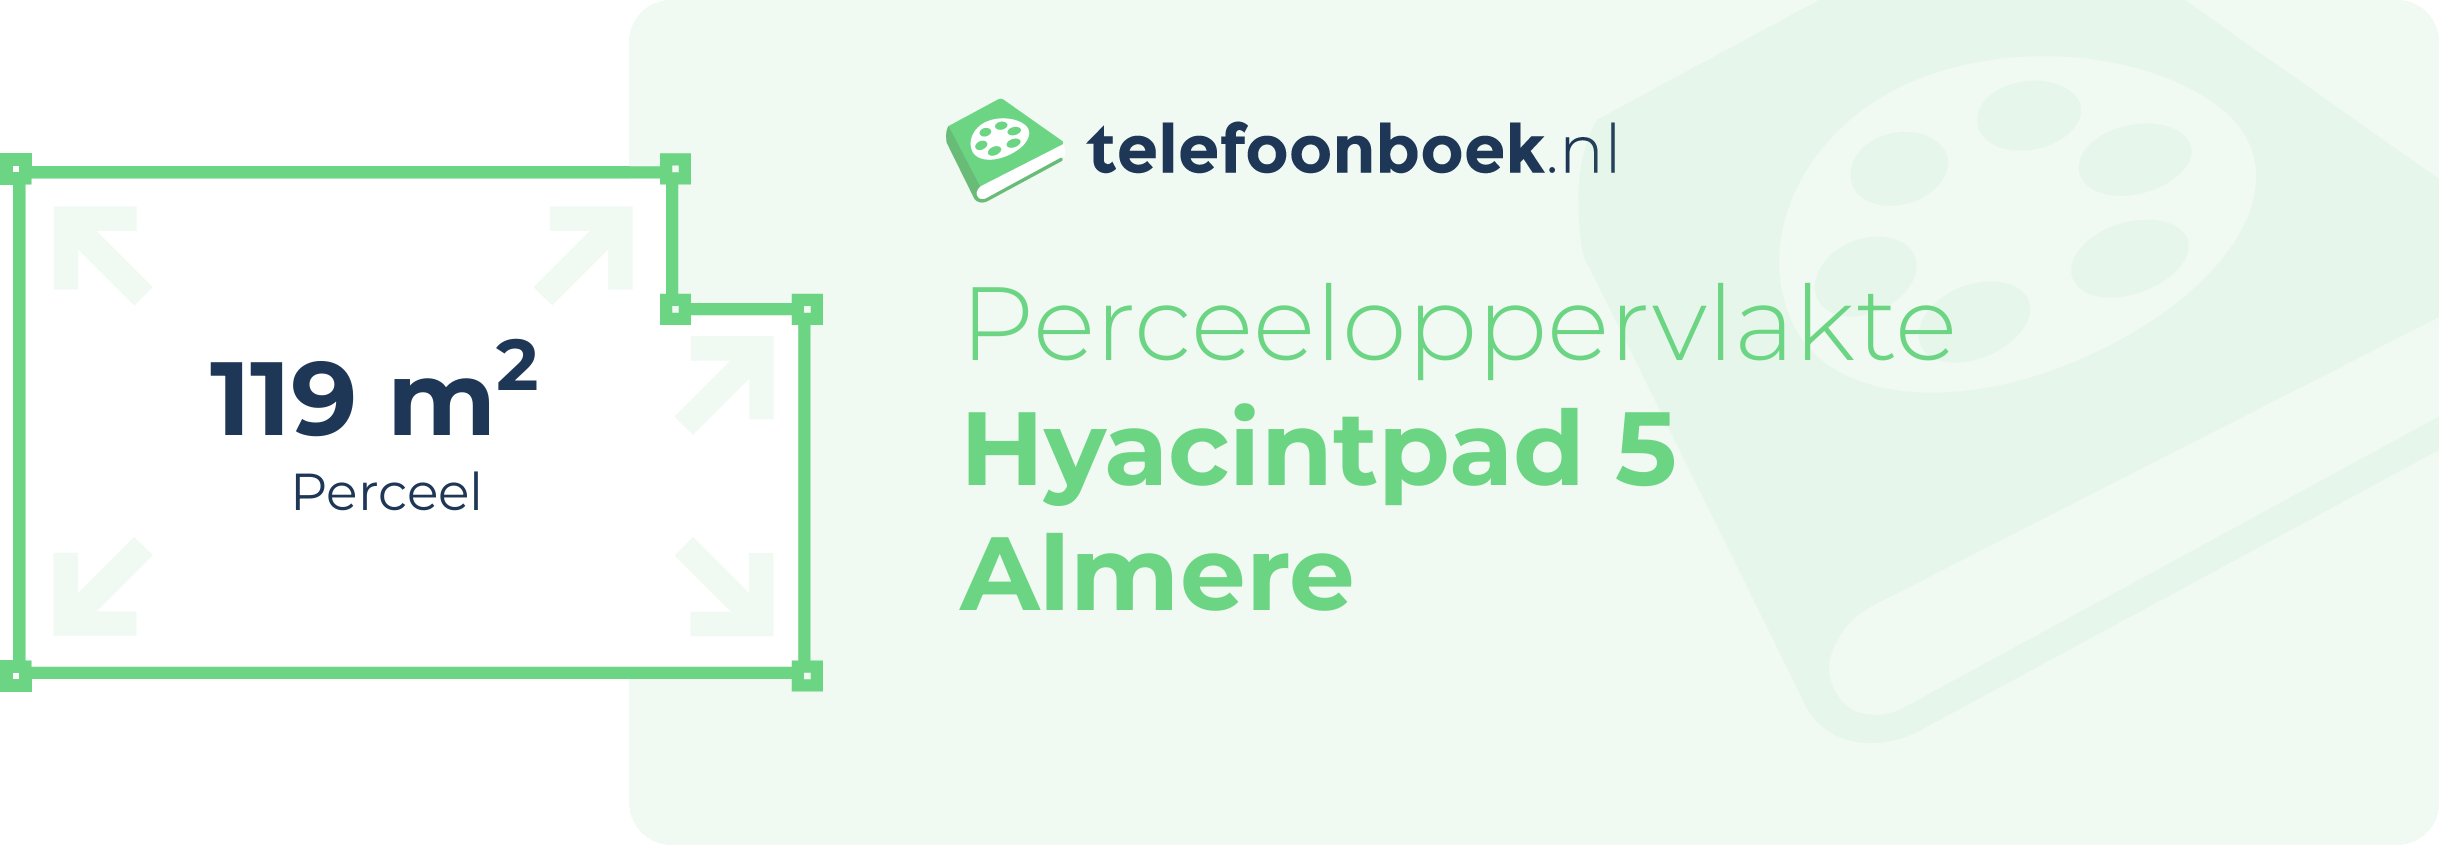 Perceeloppervlakte Hyacintpad 5 Almere